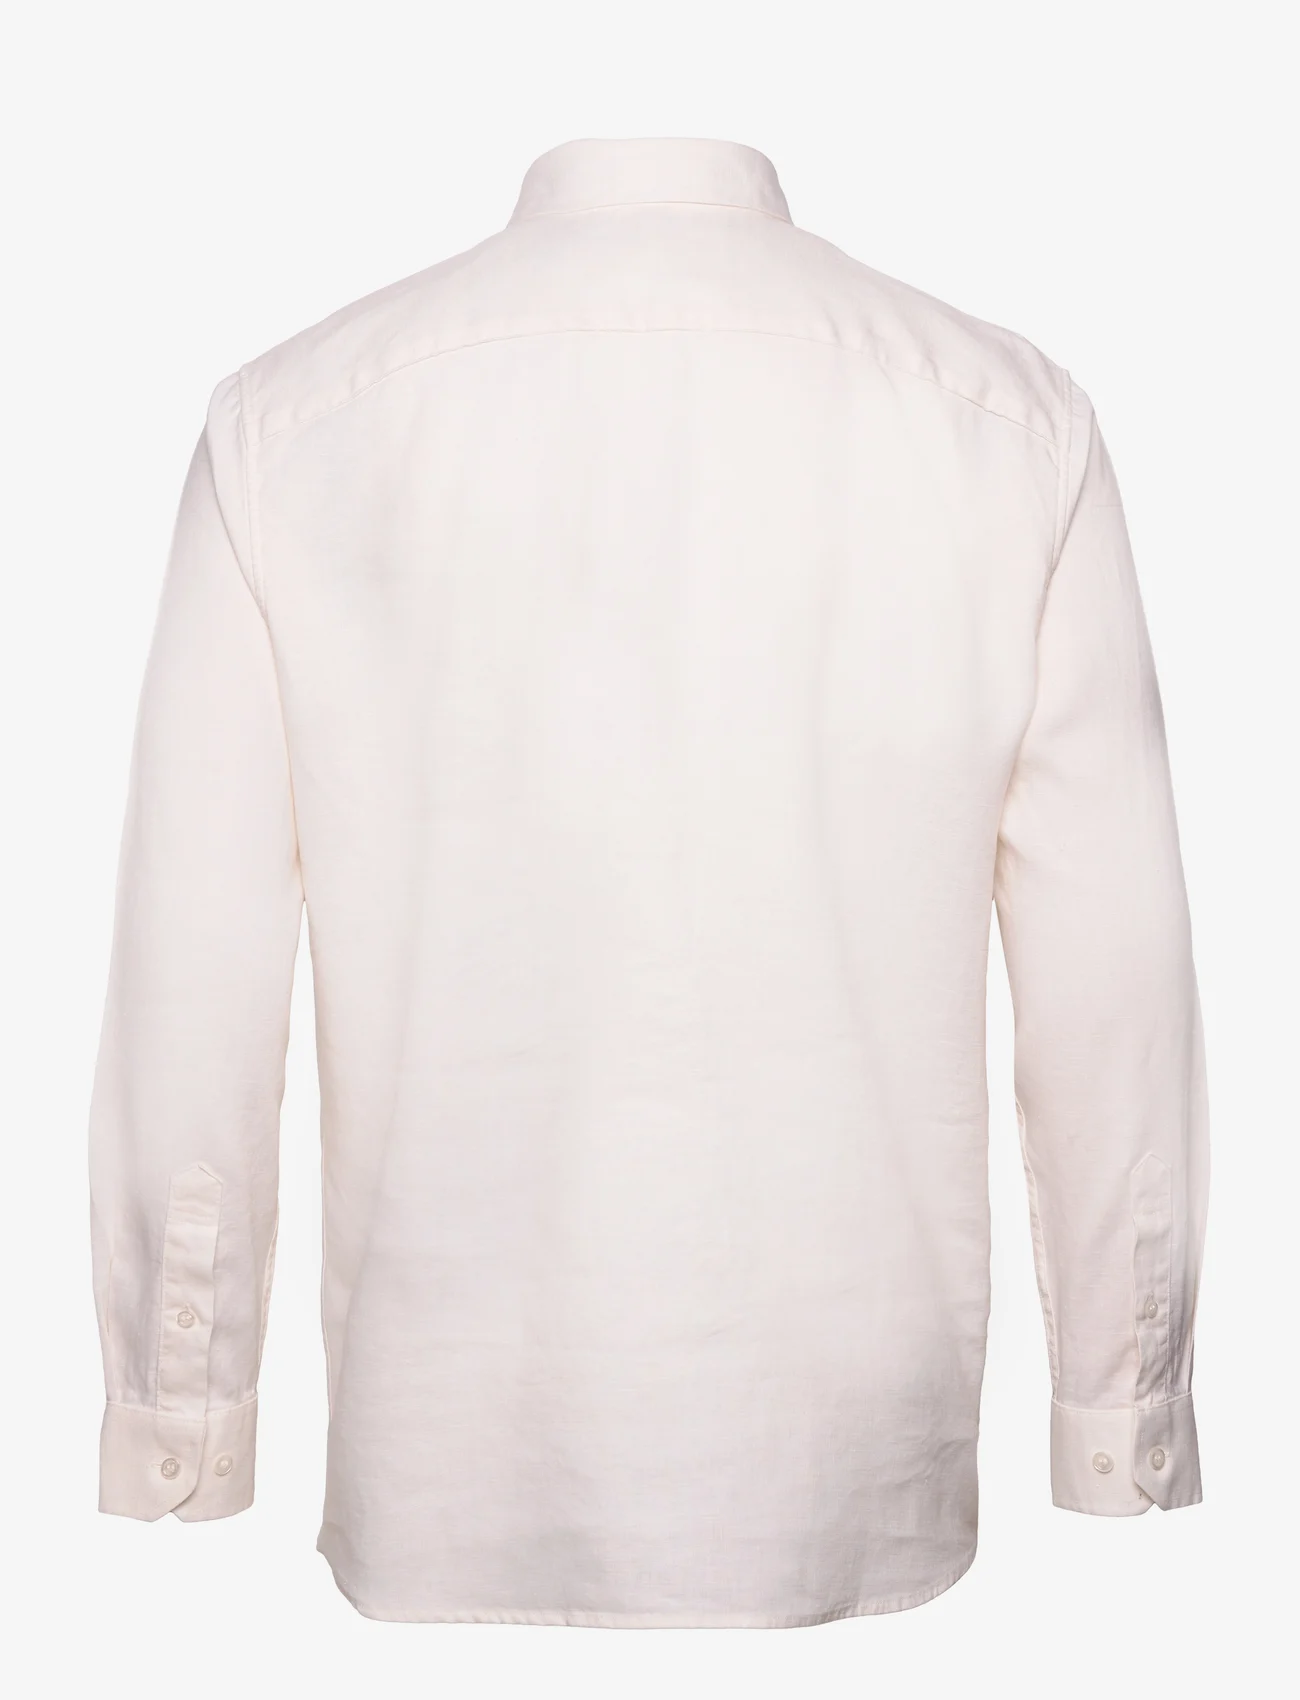 Selected Homme - SLHREGPURE-LINEN SHIRT LS BUTTON DOWN B - leinenhemden - bright white - 1